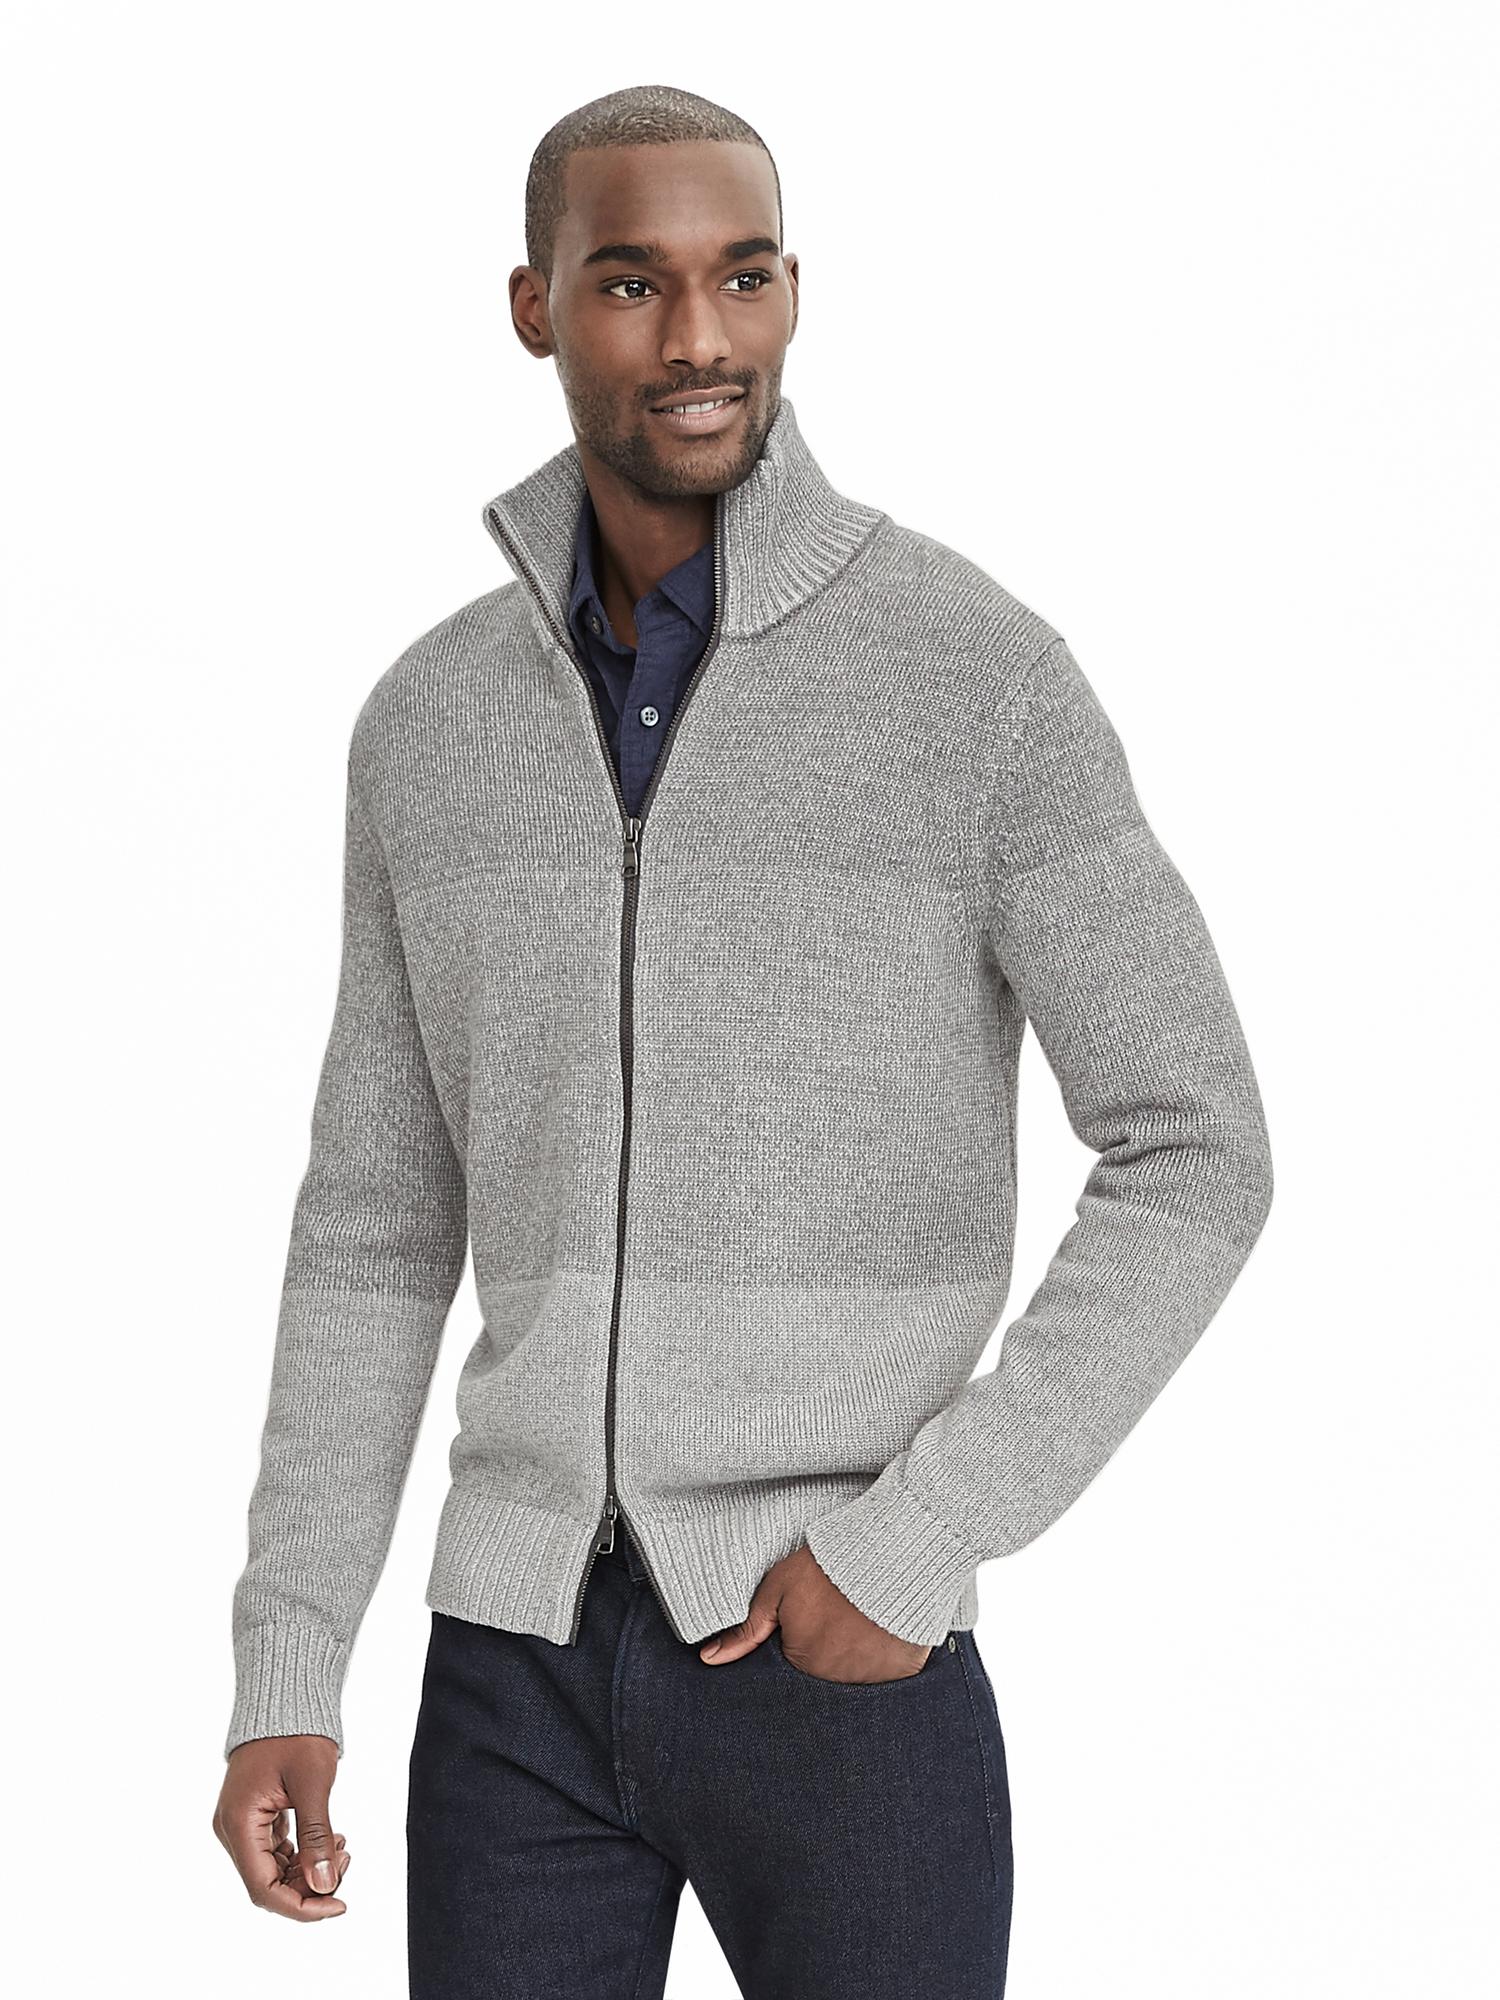 Marled Ombre Stripe Sweater Jacket